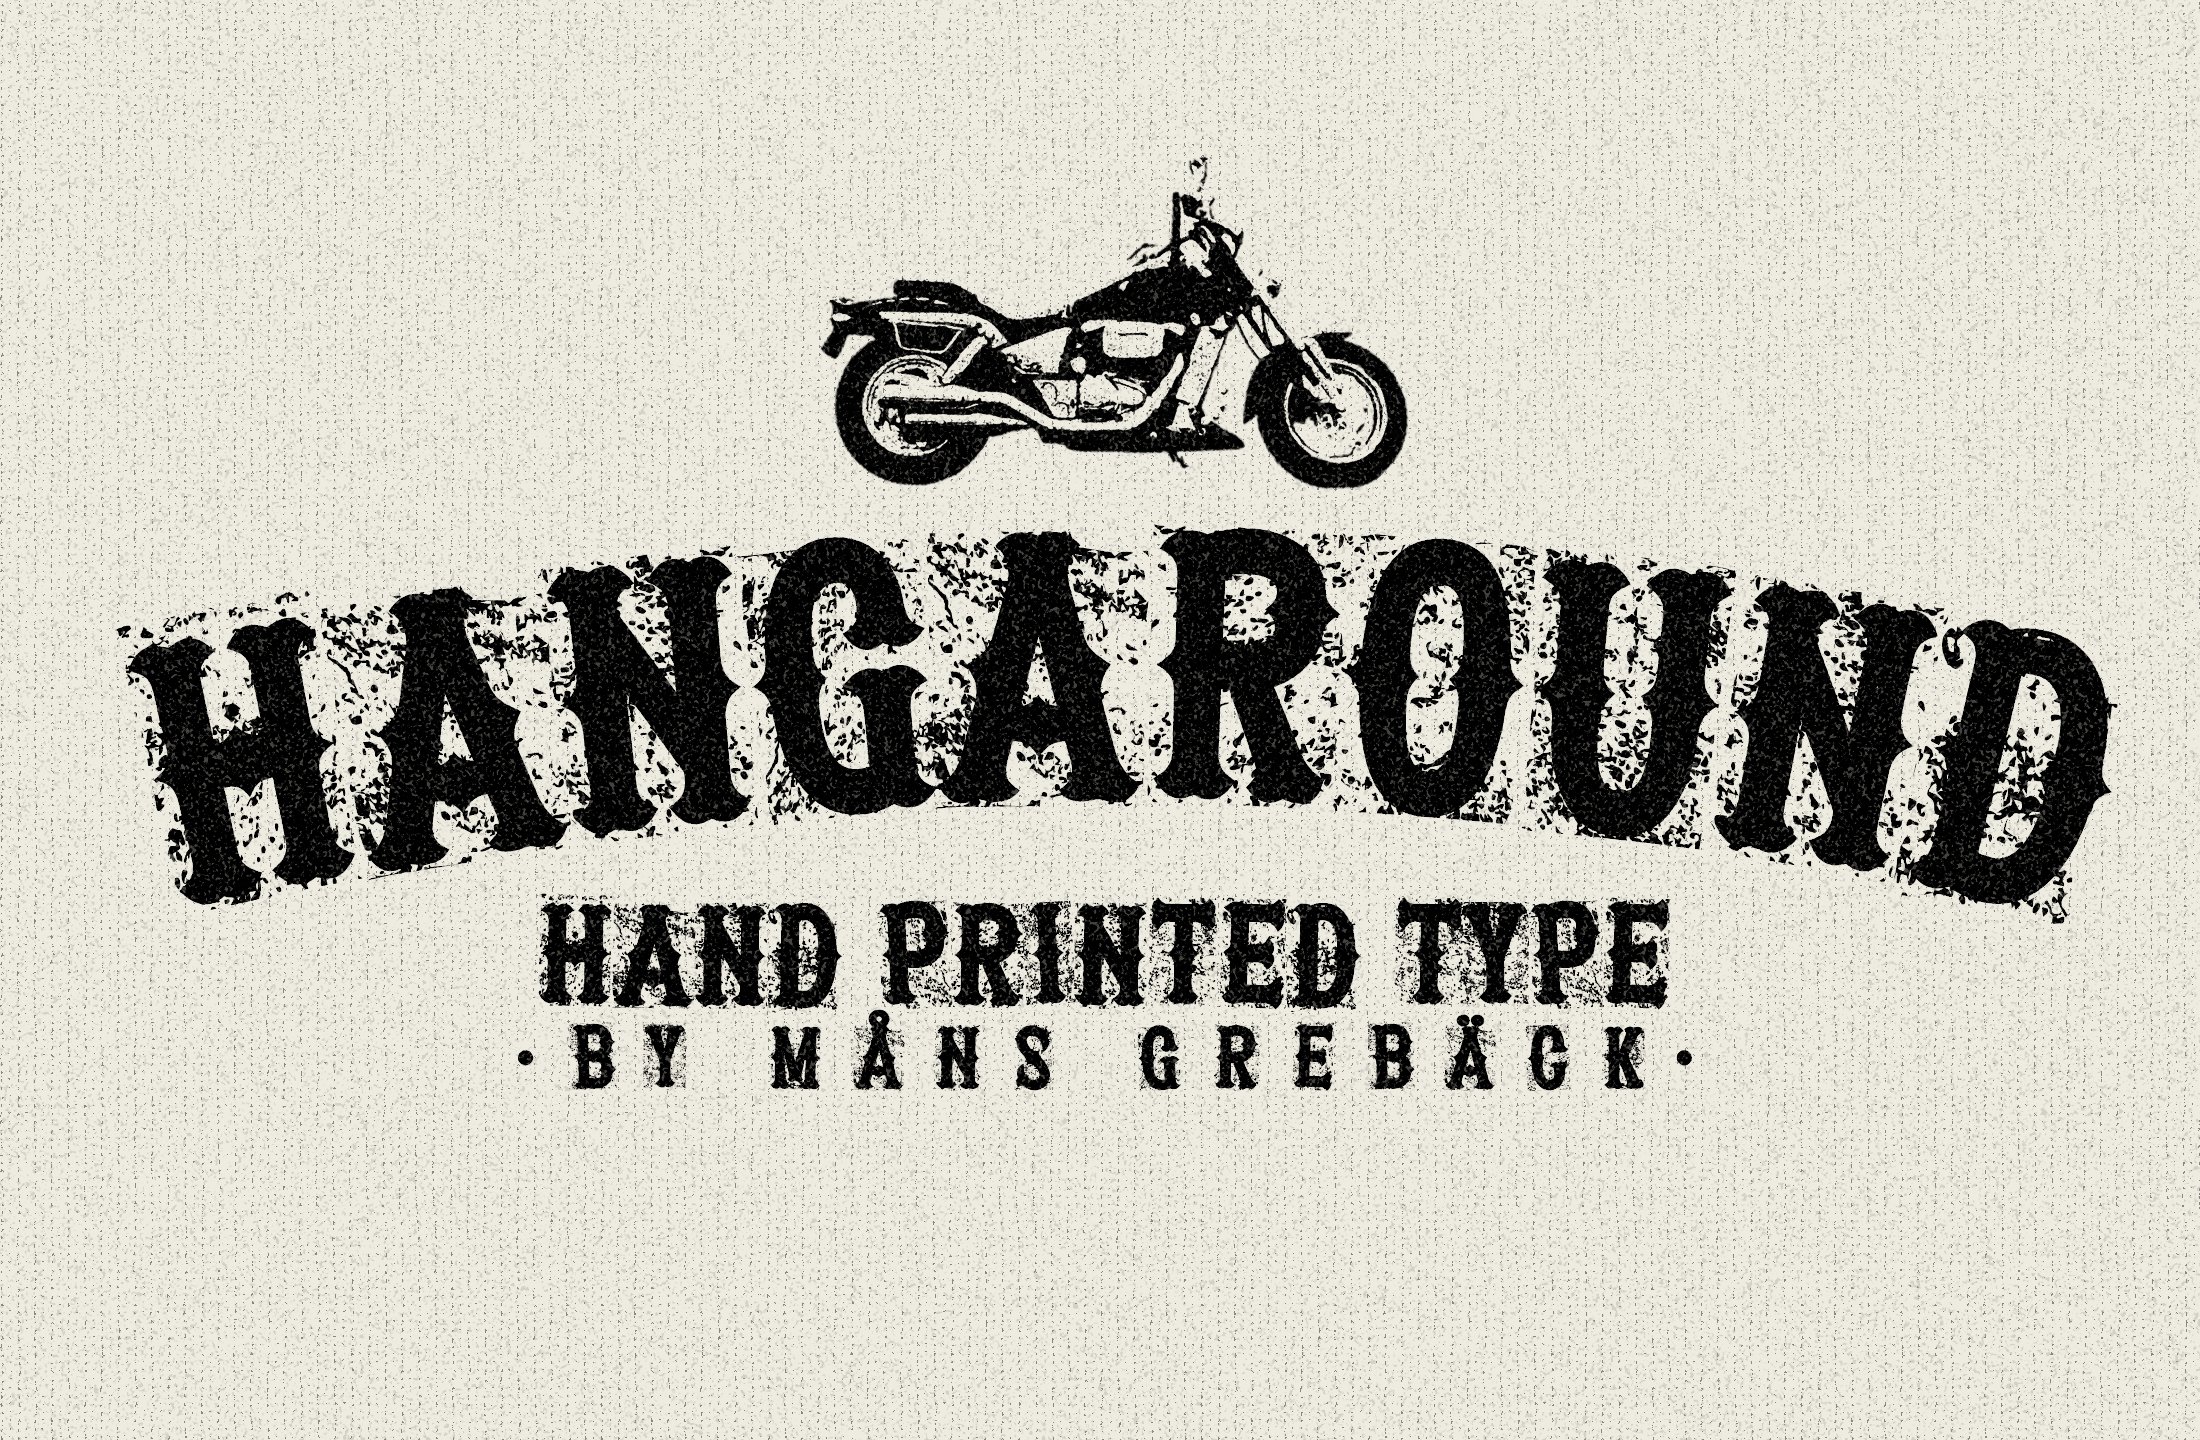 Hangaround – Hand Printed Typeface cover image.